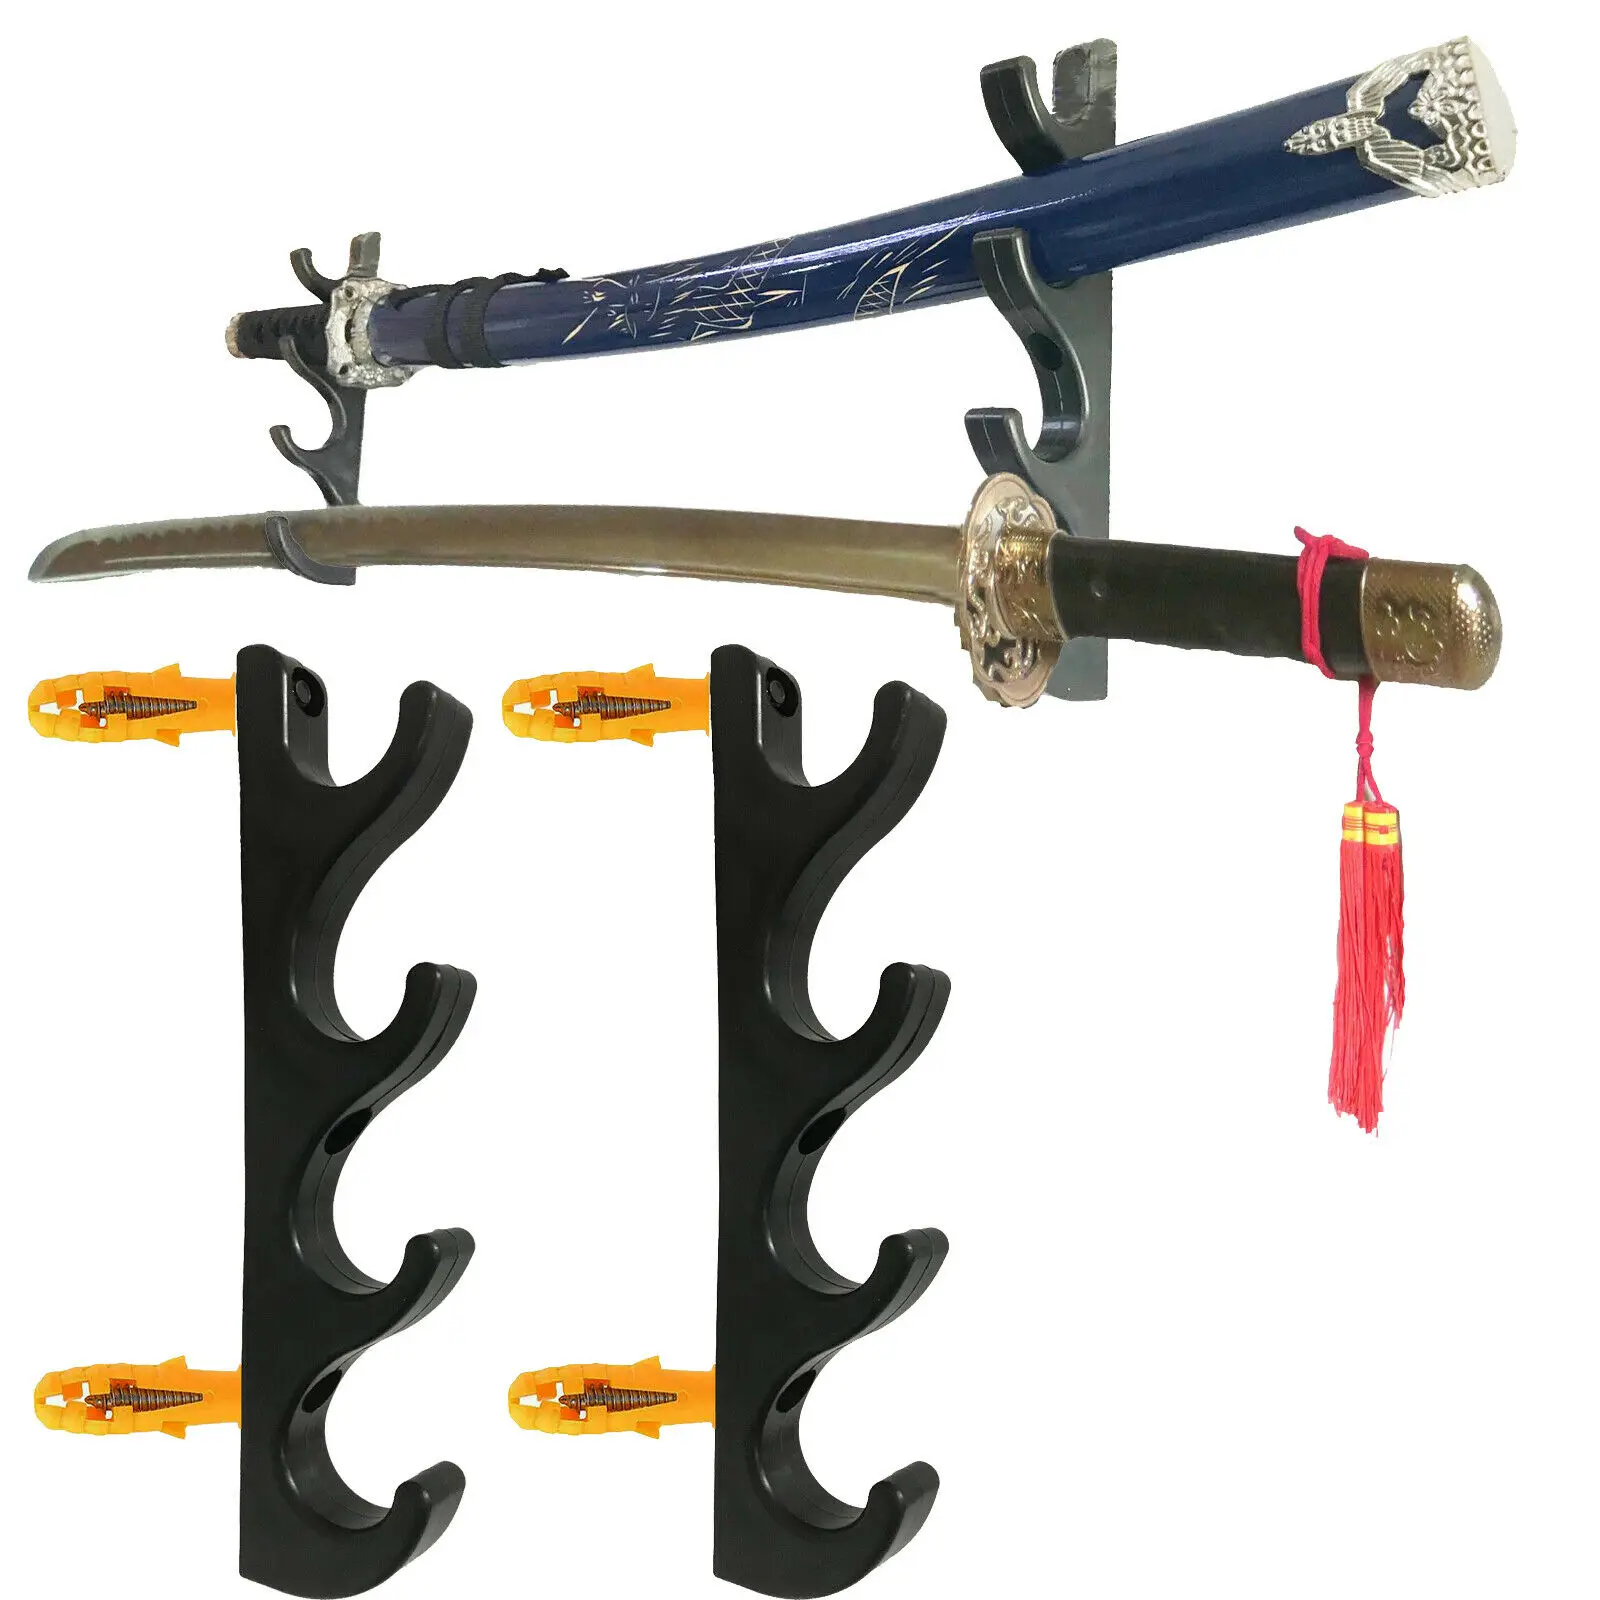 Deluxe 4 Tiers Wall Mounted Samurai Katana Sword Display Stand Brand New 